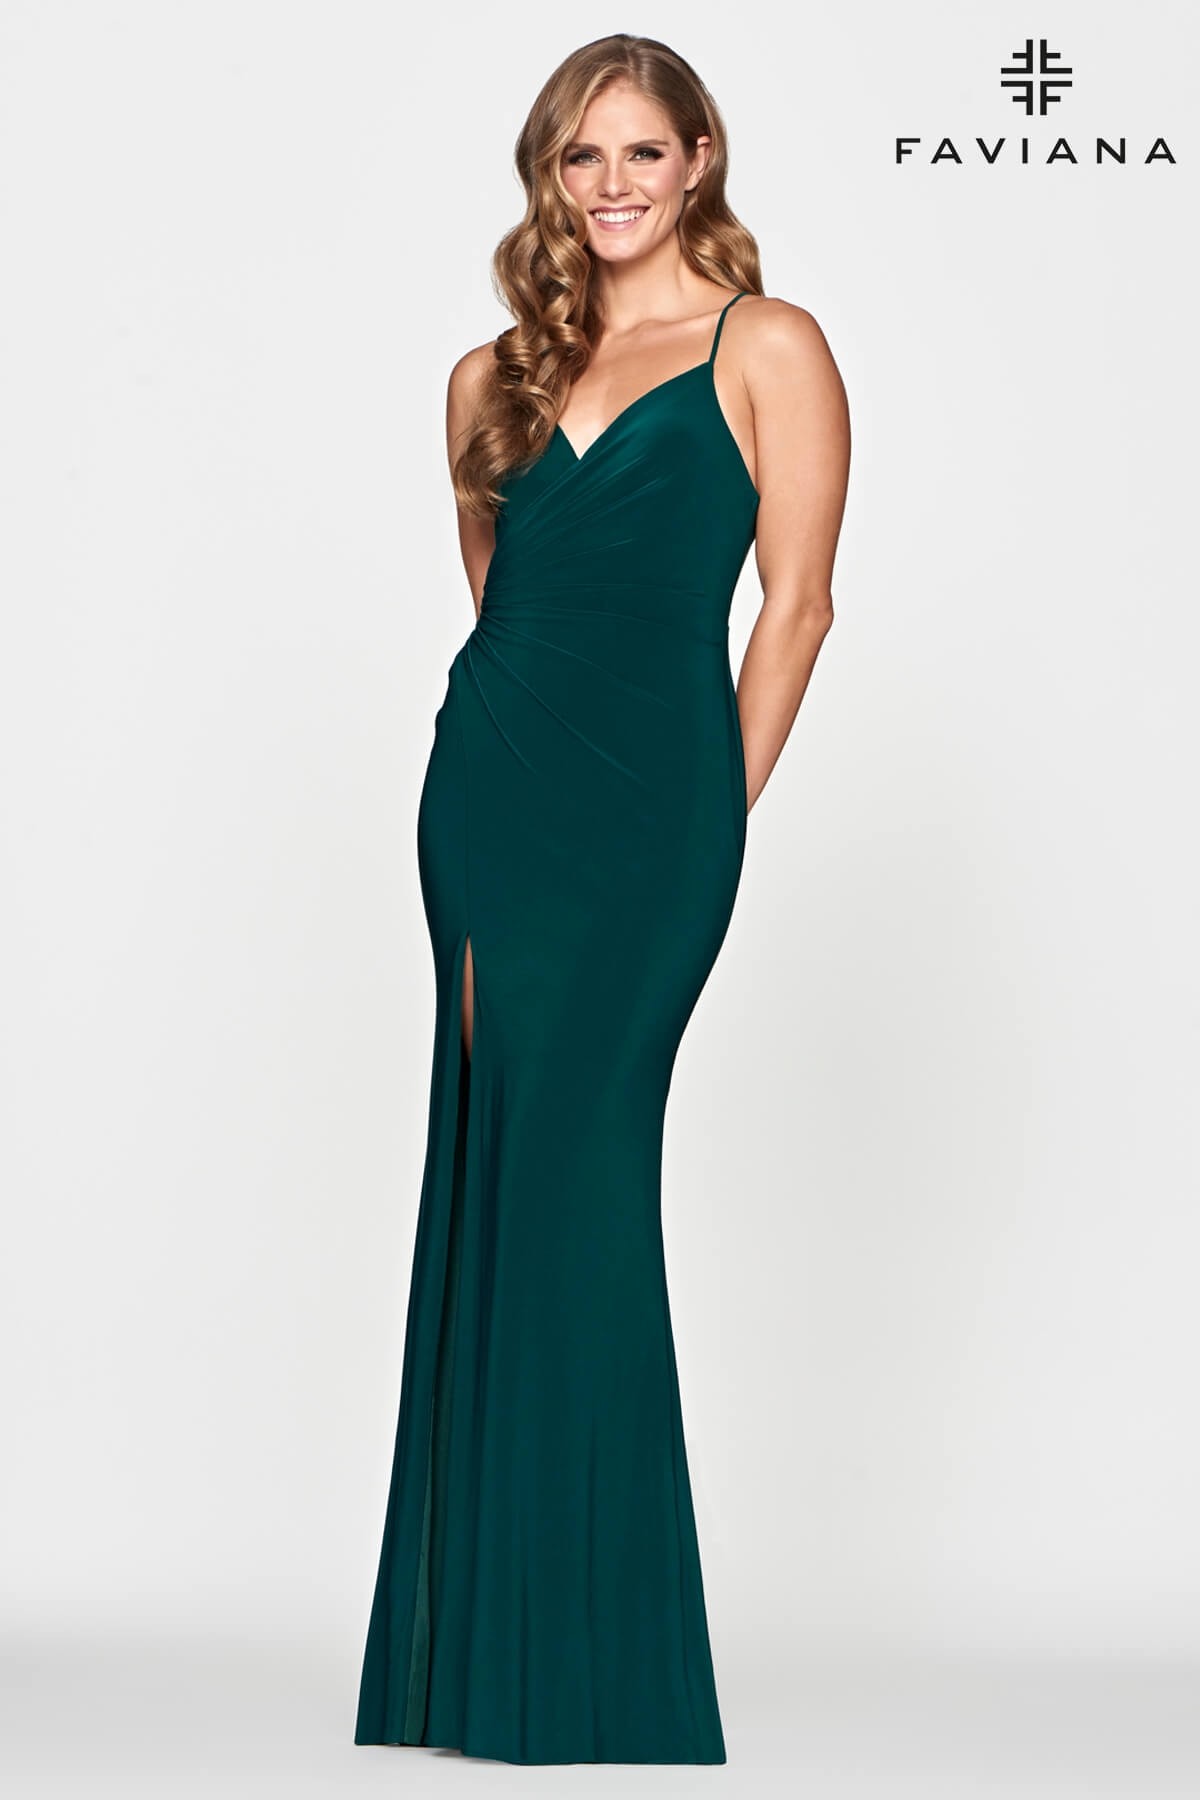 Faviana S10685 Prom Dress